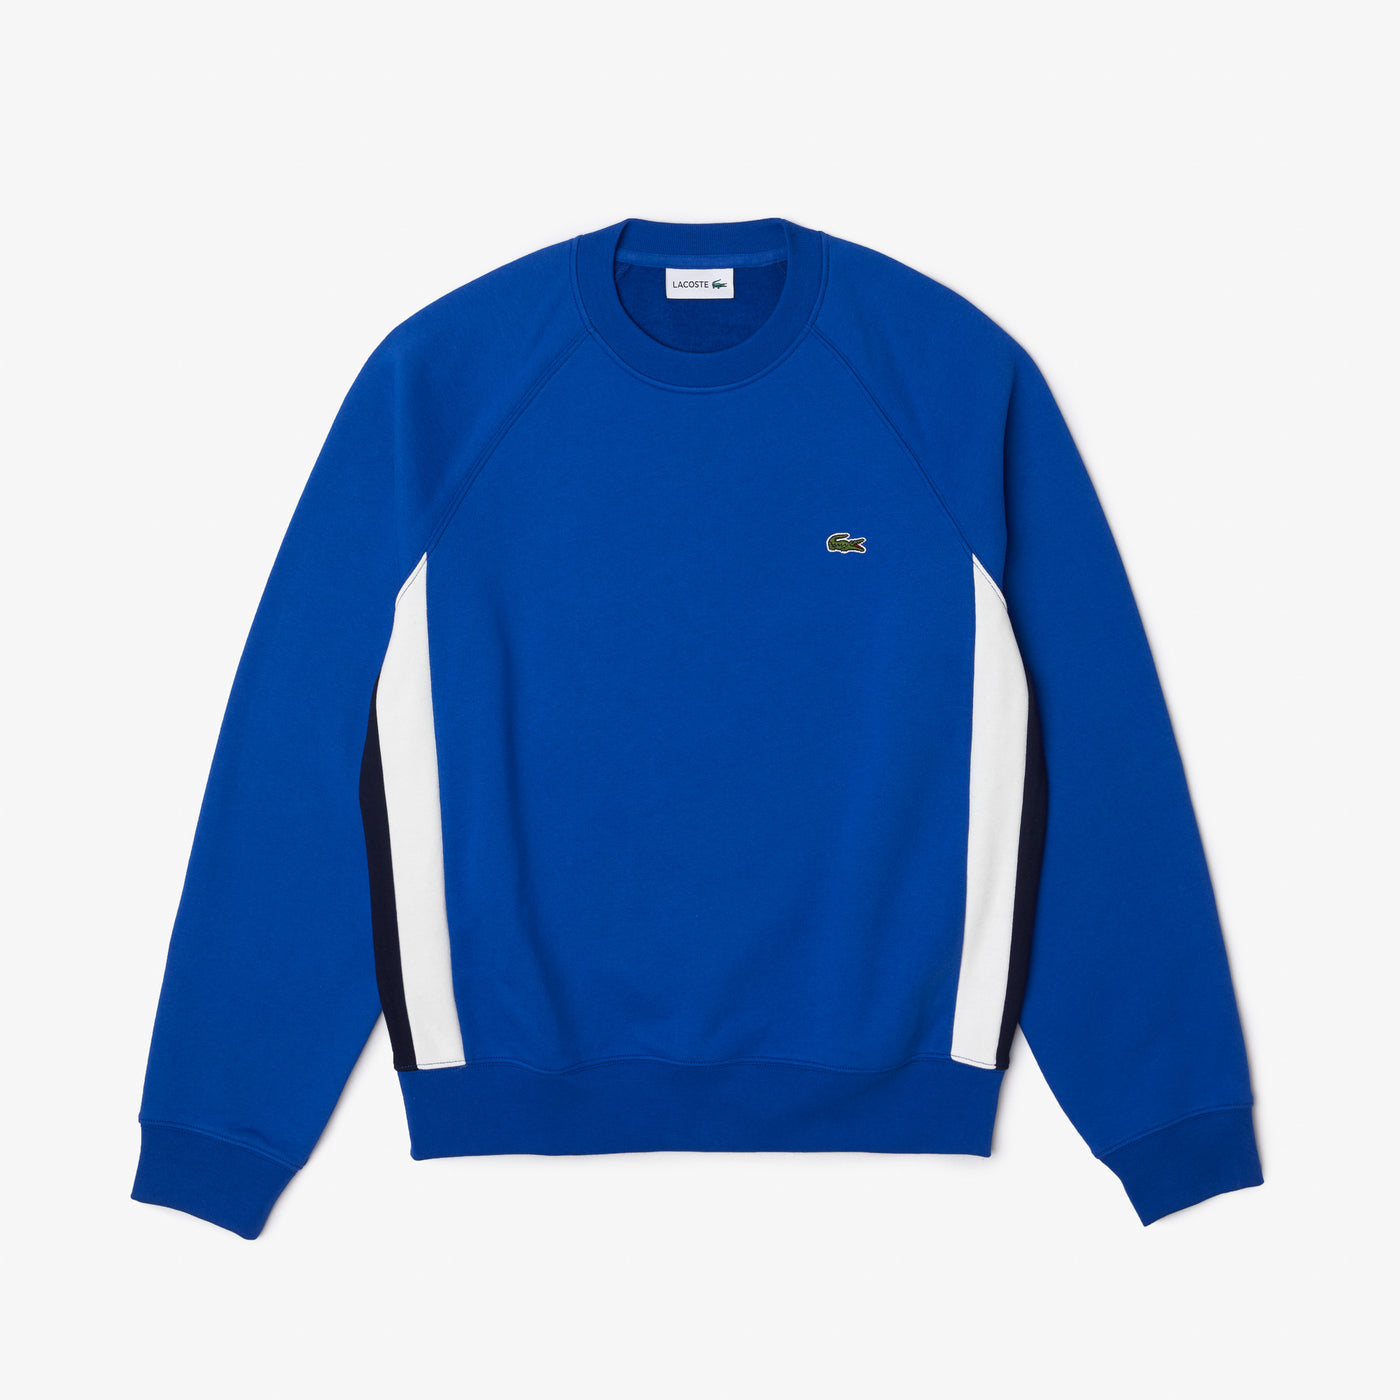 Shop The Latest Collection Of Lacoste Men’S Lacoste Brushed Fleece Colourblock Sweatshirt - Sh5605 In Lebanon